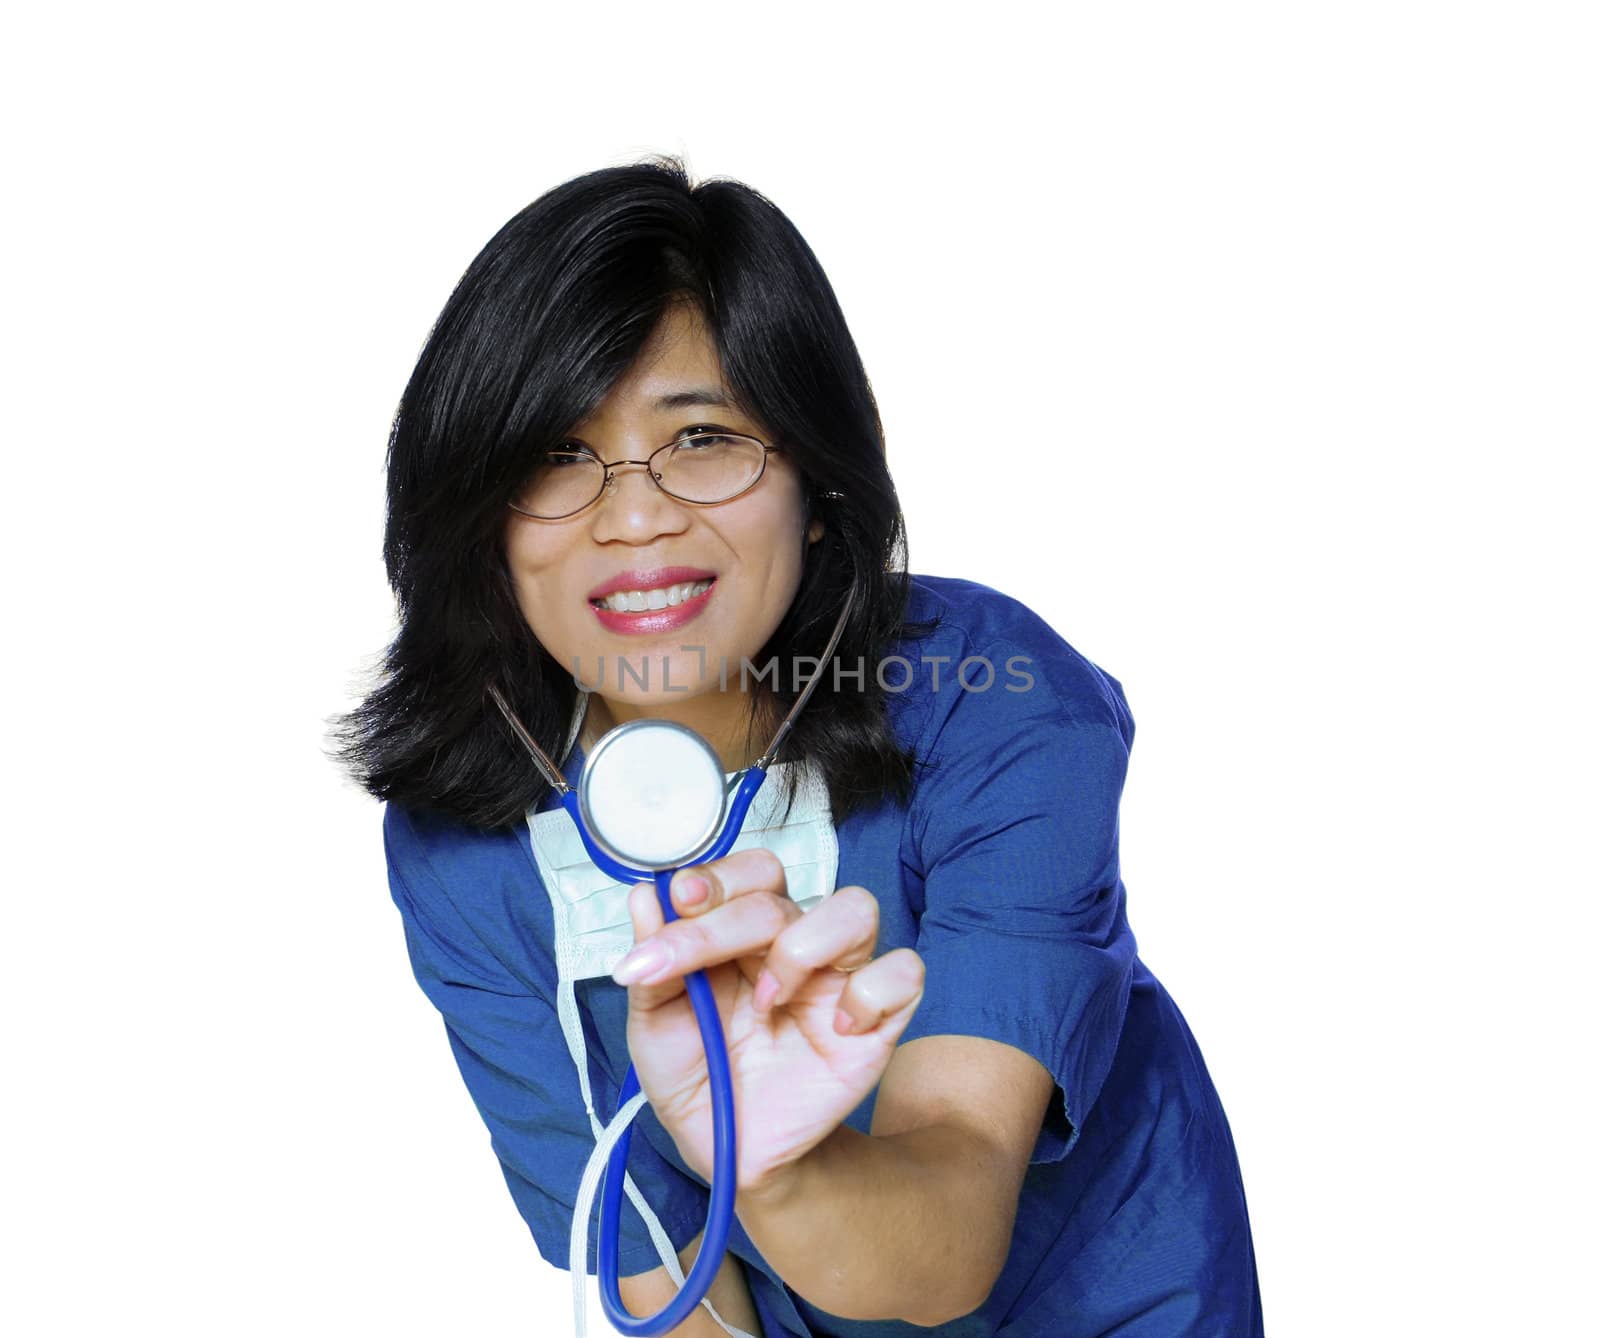 Kind nurse or doctor with stethoscope by jarenwicklund